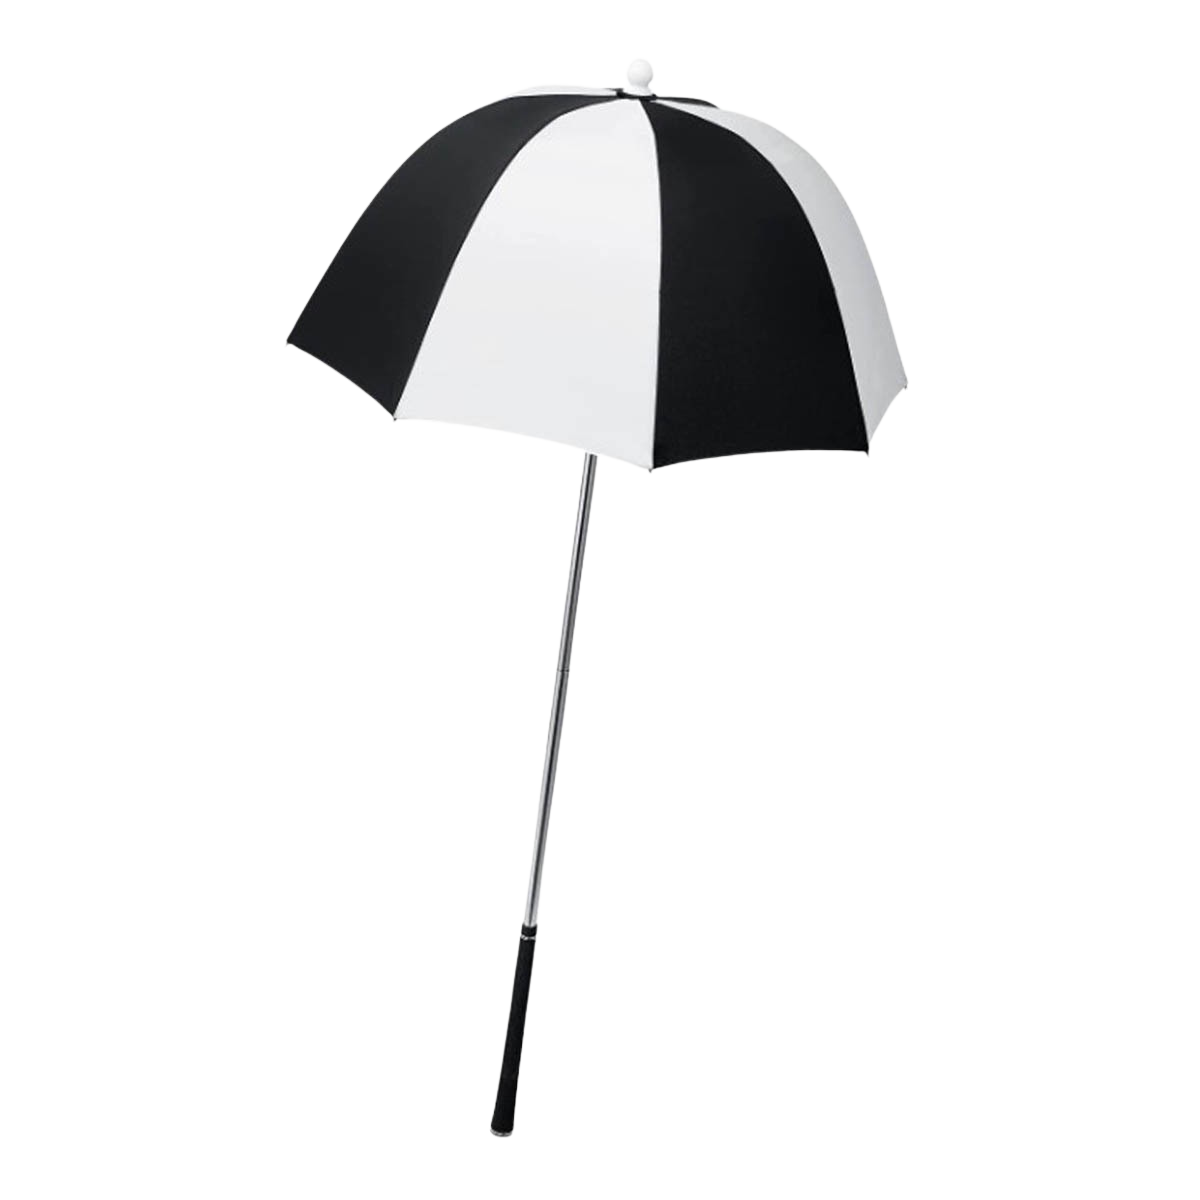 Bag Boy Club Canopy Umbrella